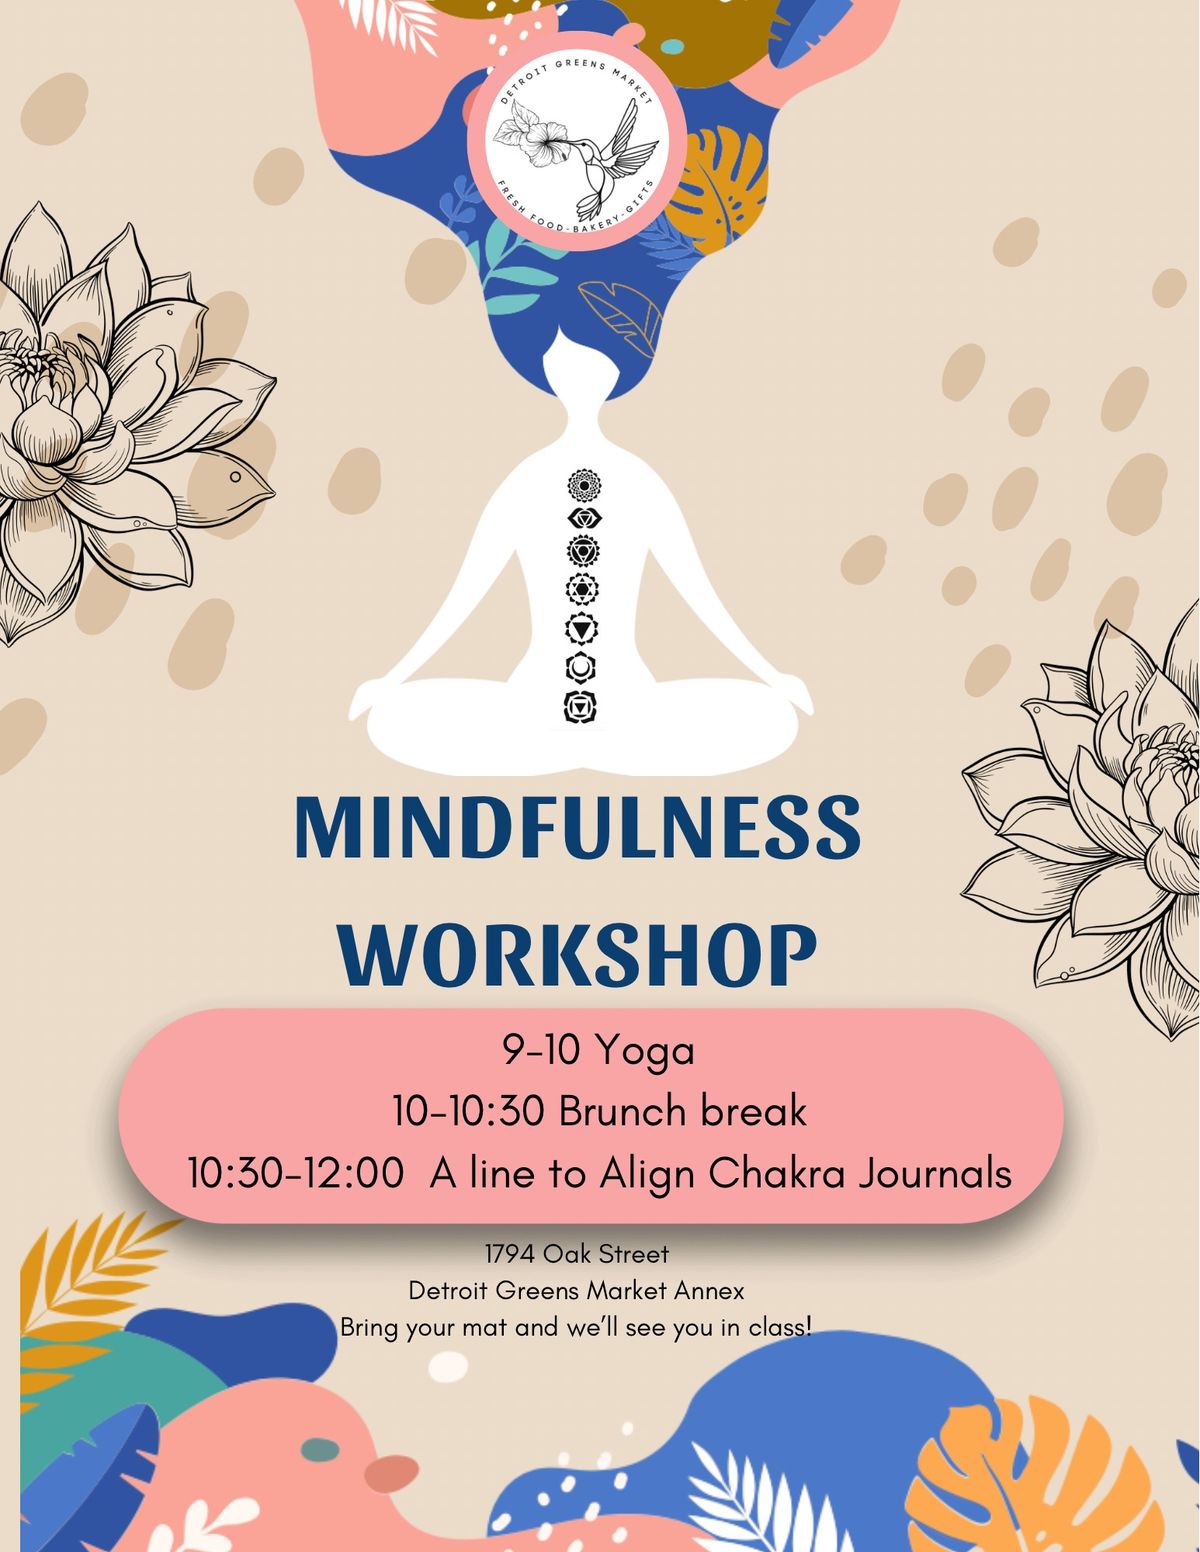 Mindfulness Workshop @ DGM